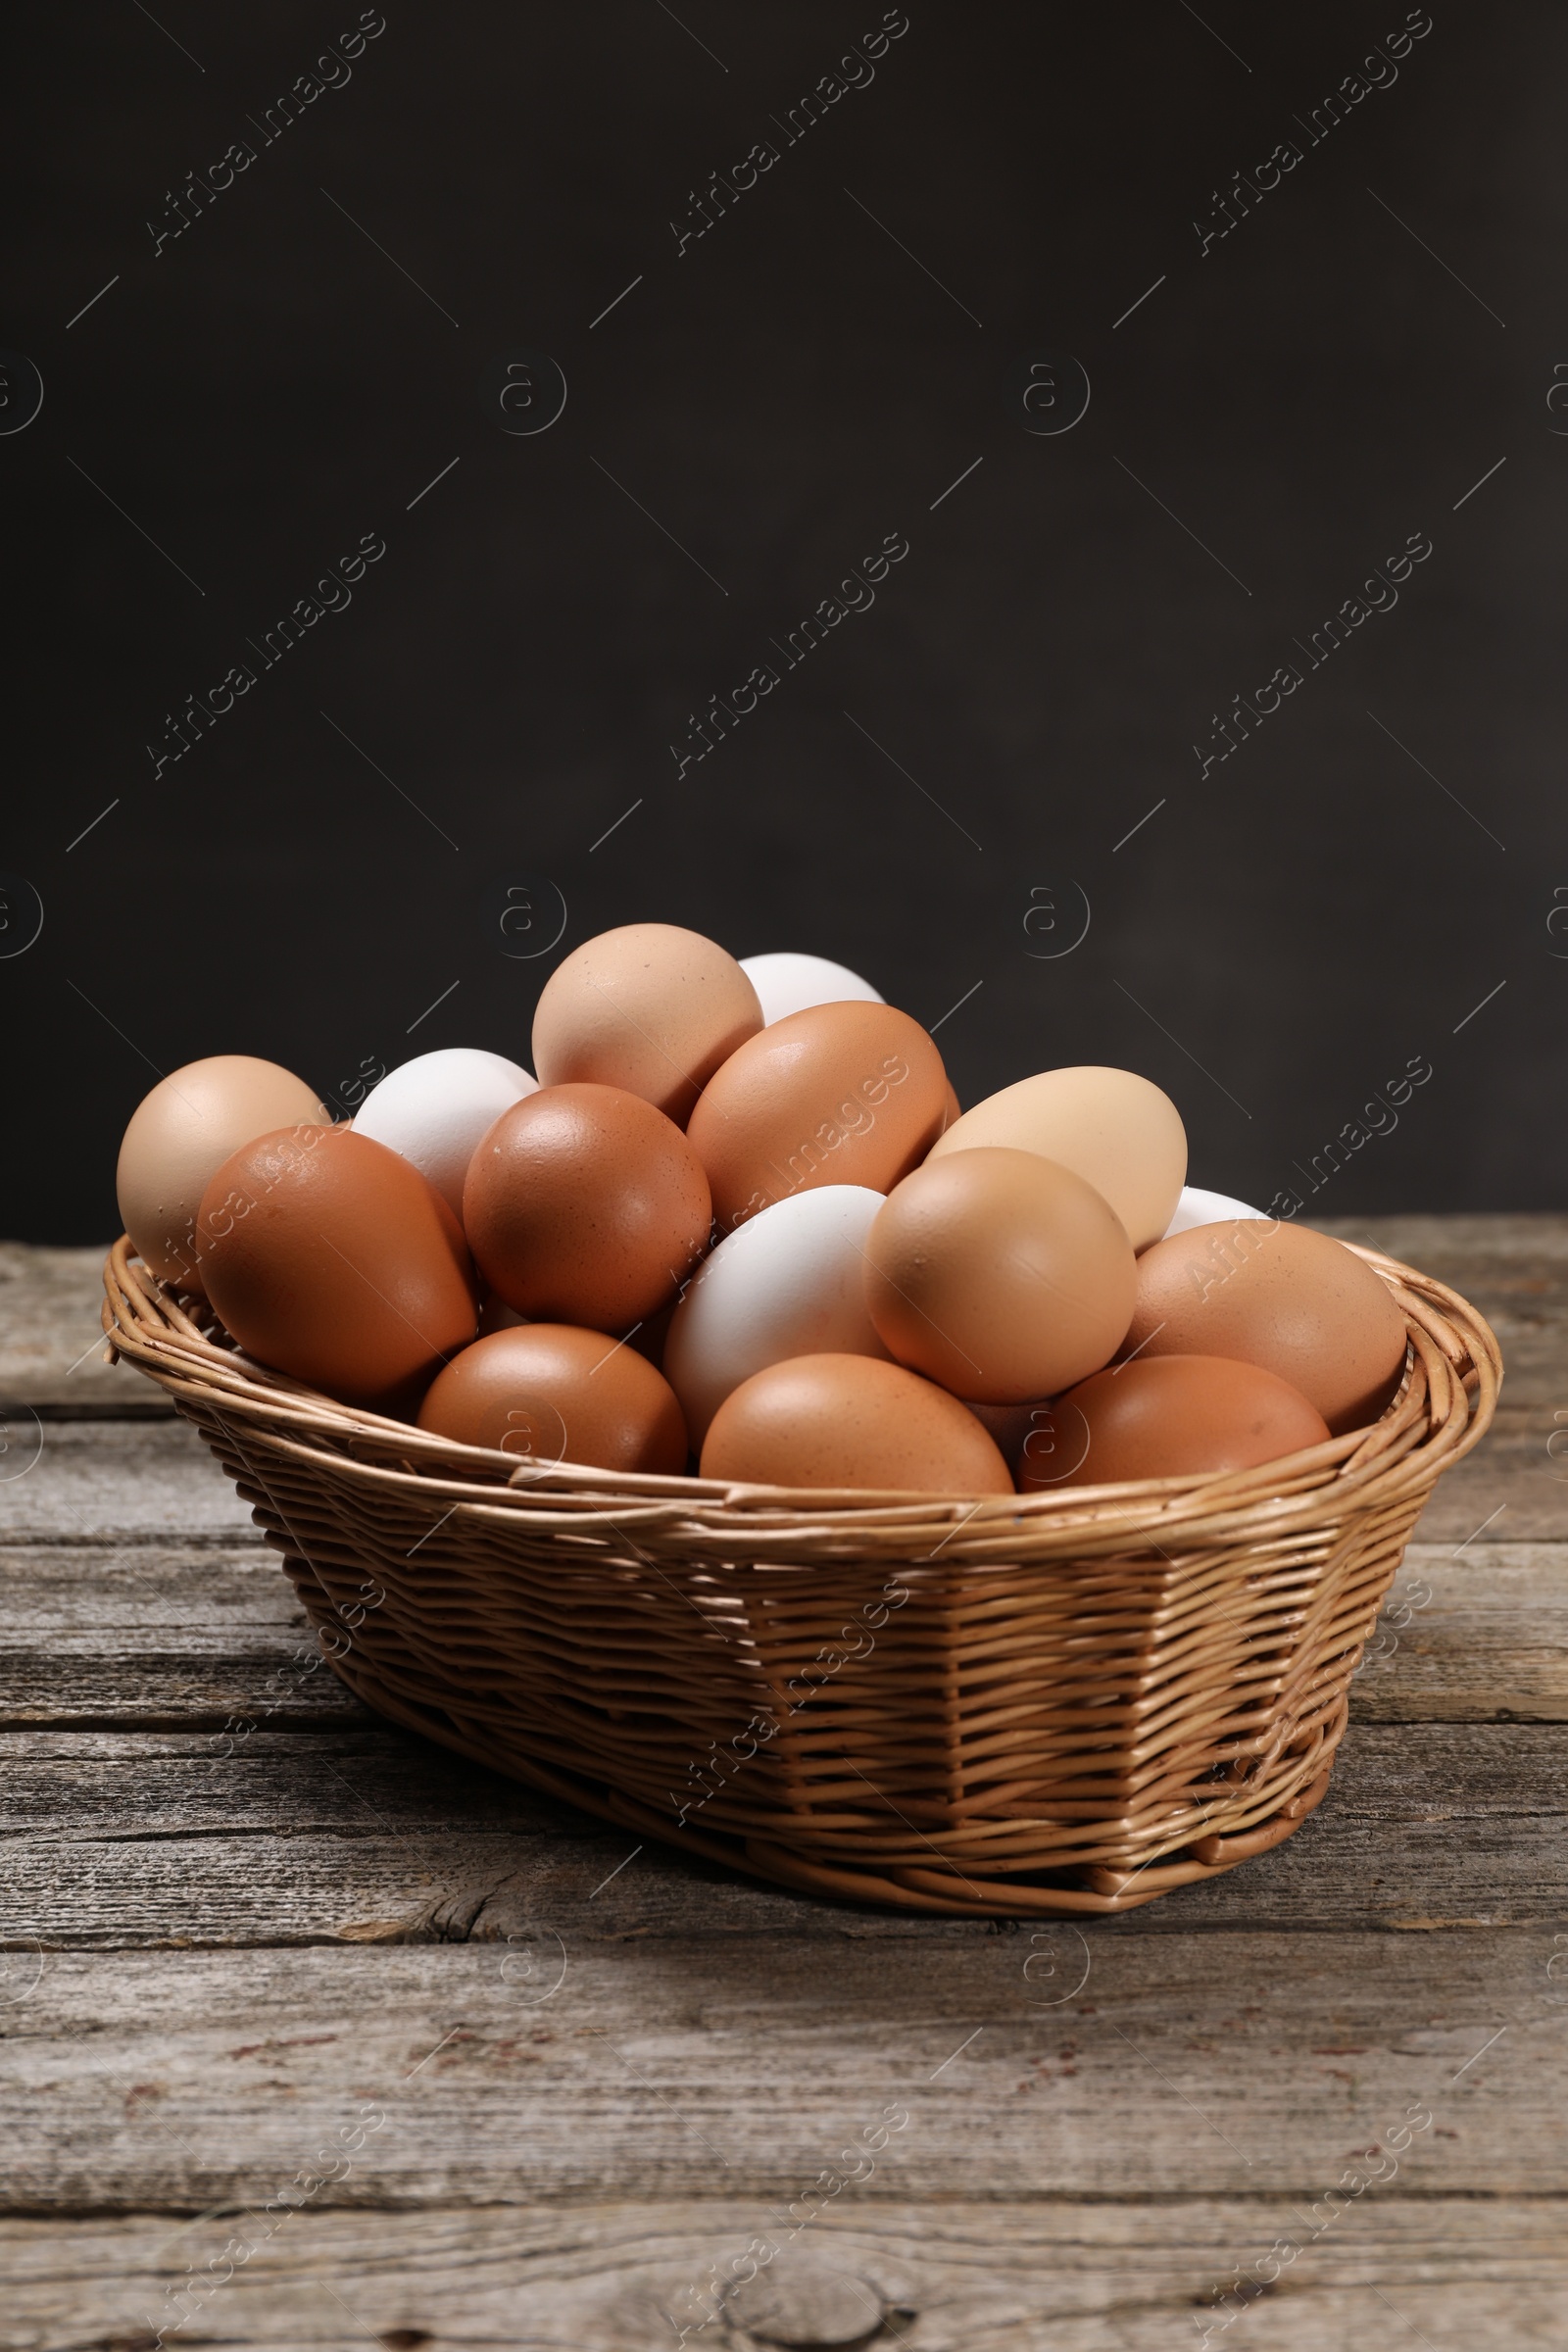 Photo of Fresh chicken eggs in wicker basket on wooden table